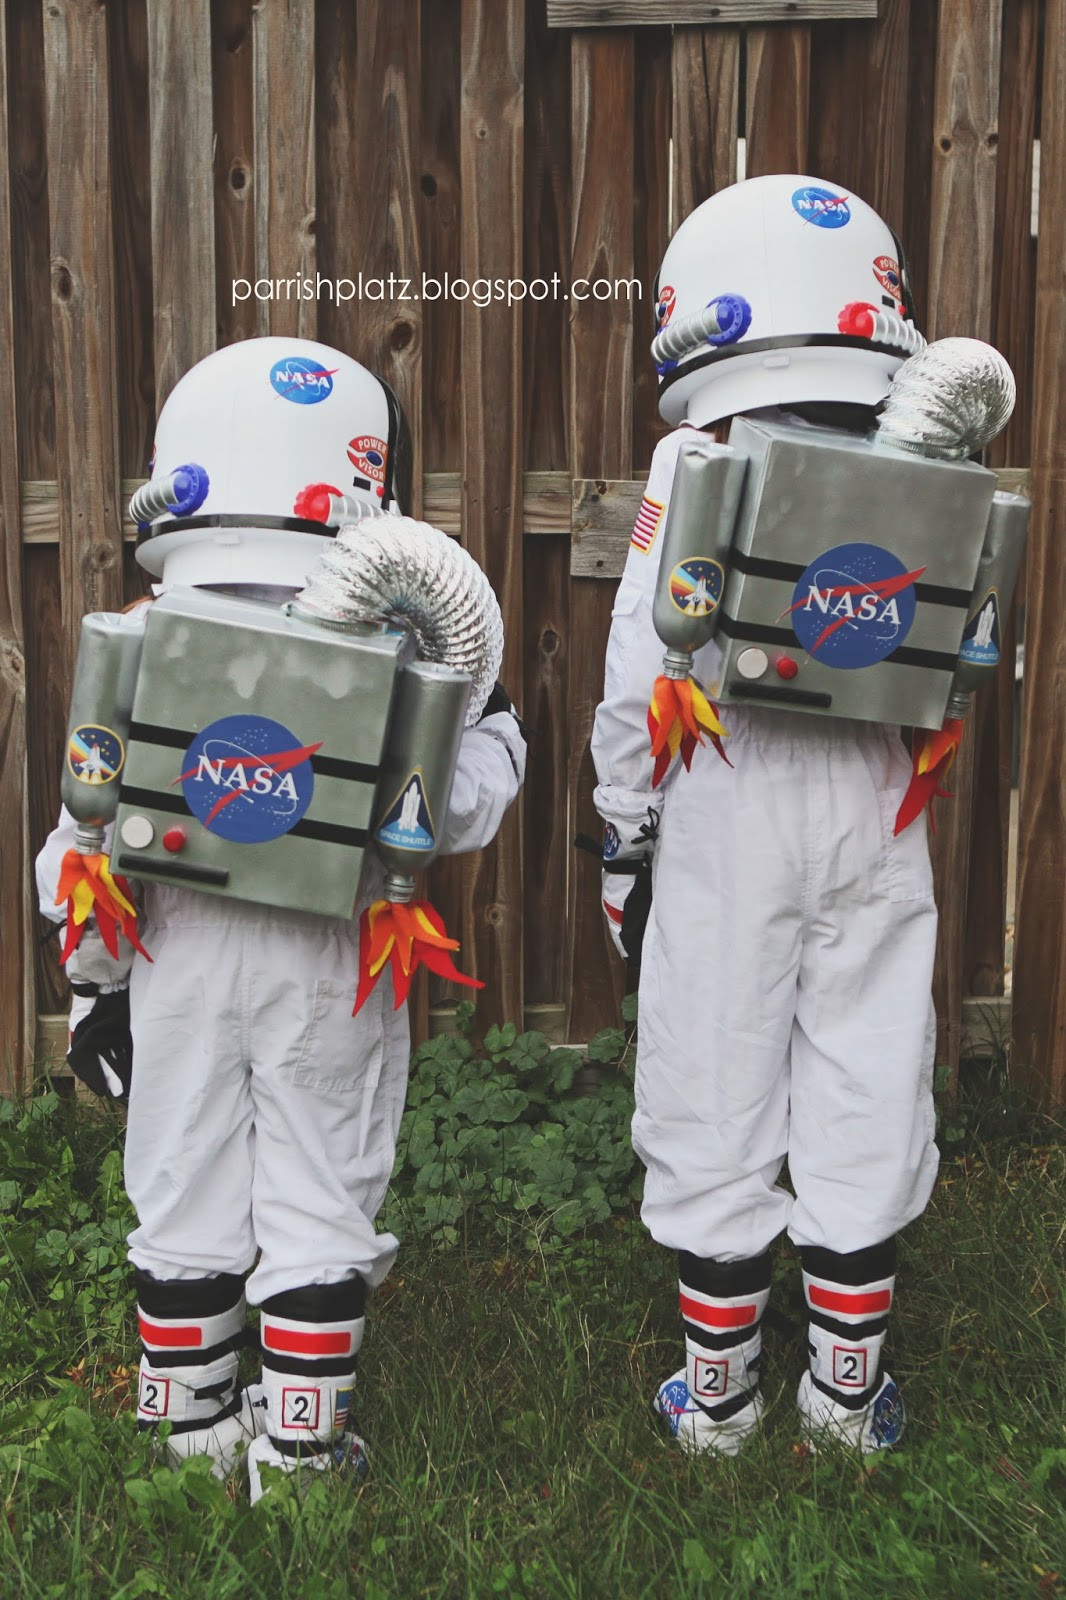 Best ideas about DIY Astronaut Costume
. Save or Pin Parrish Platz Halloween 2015 Now.